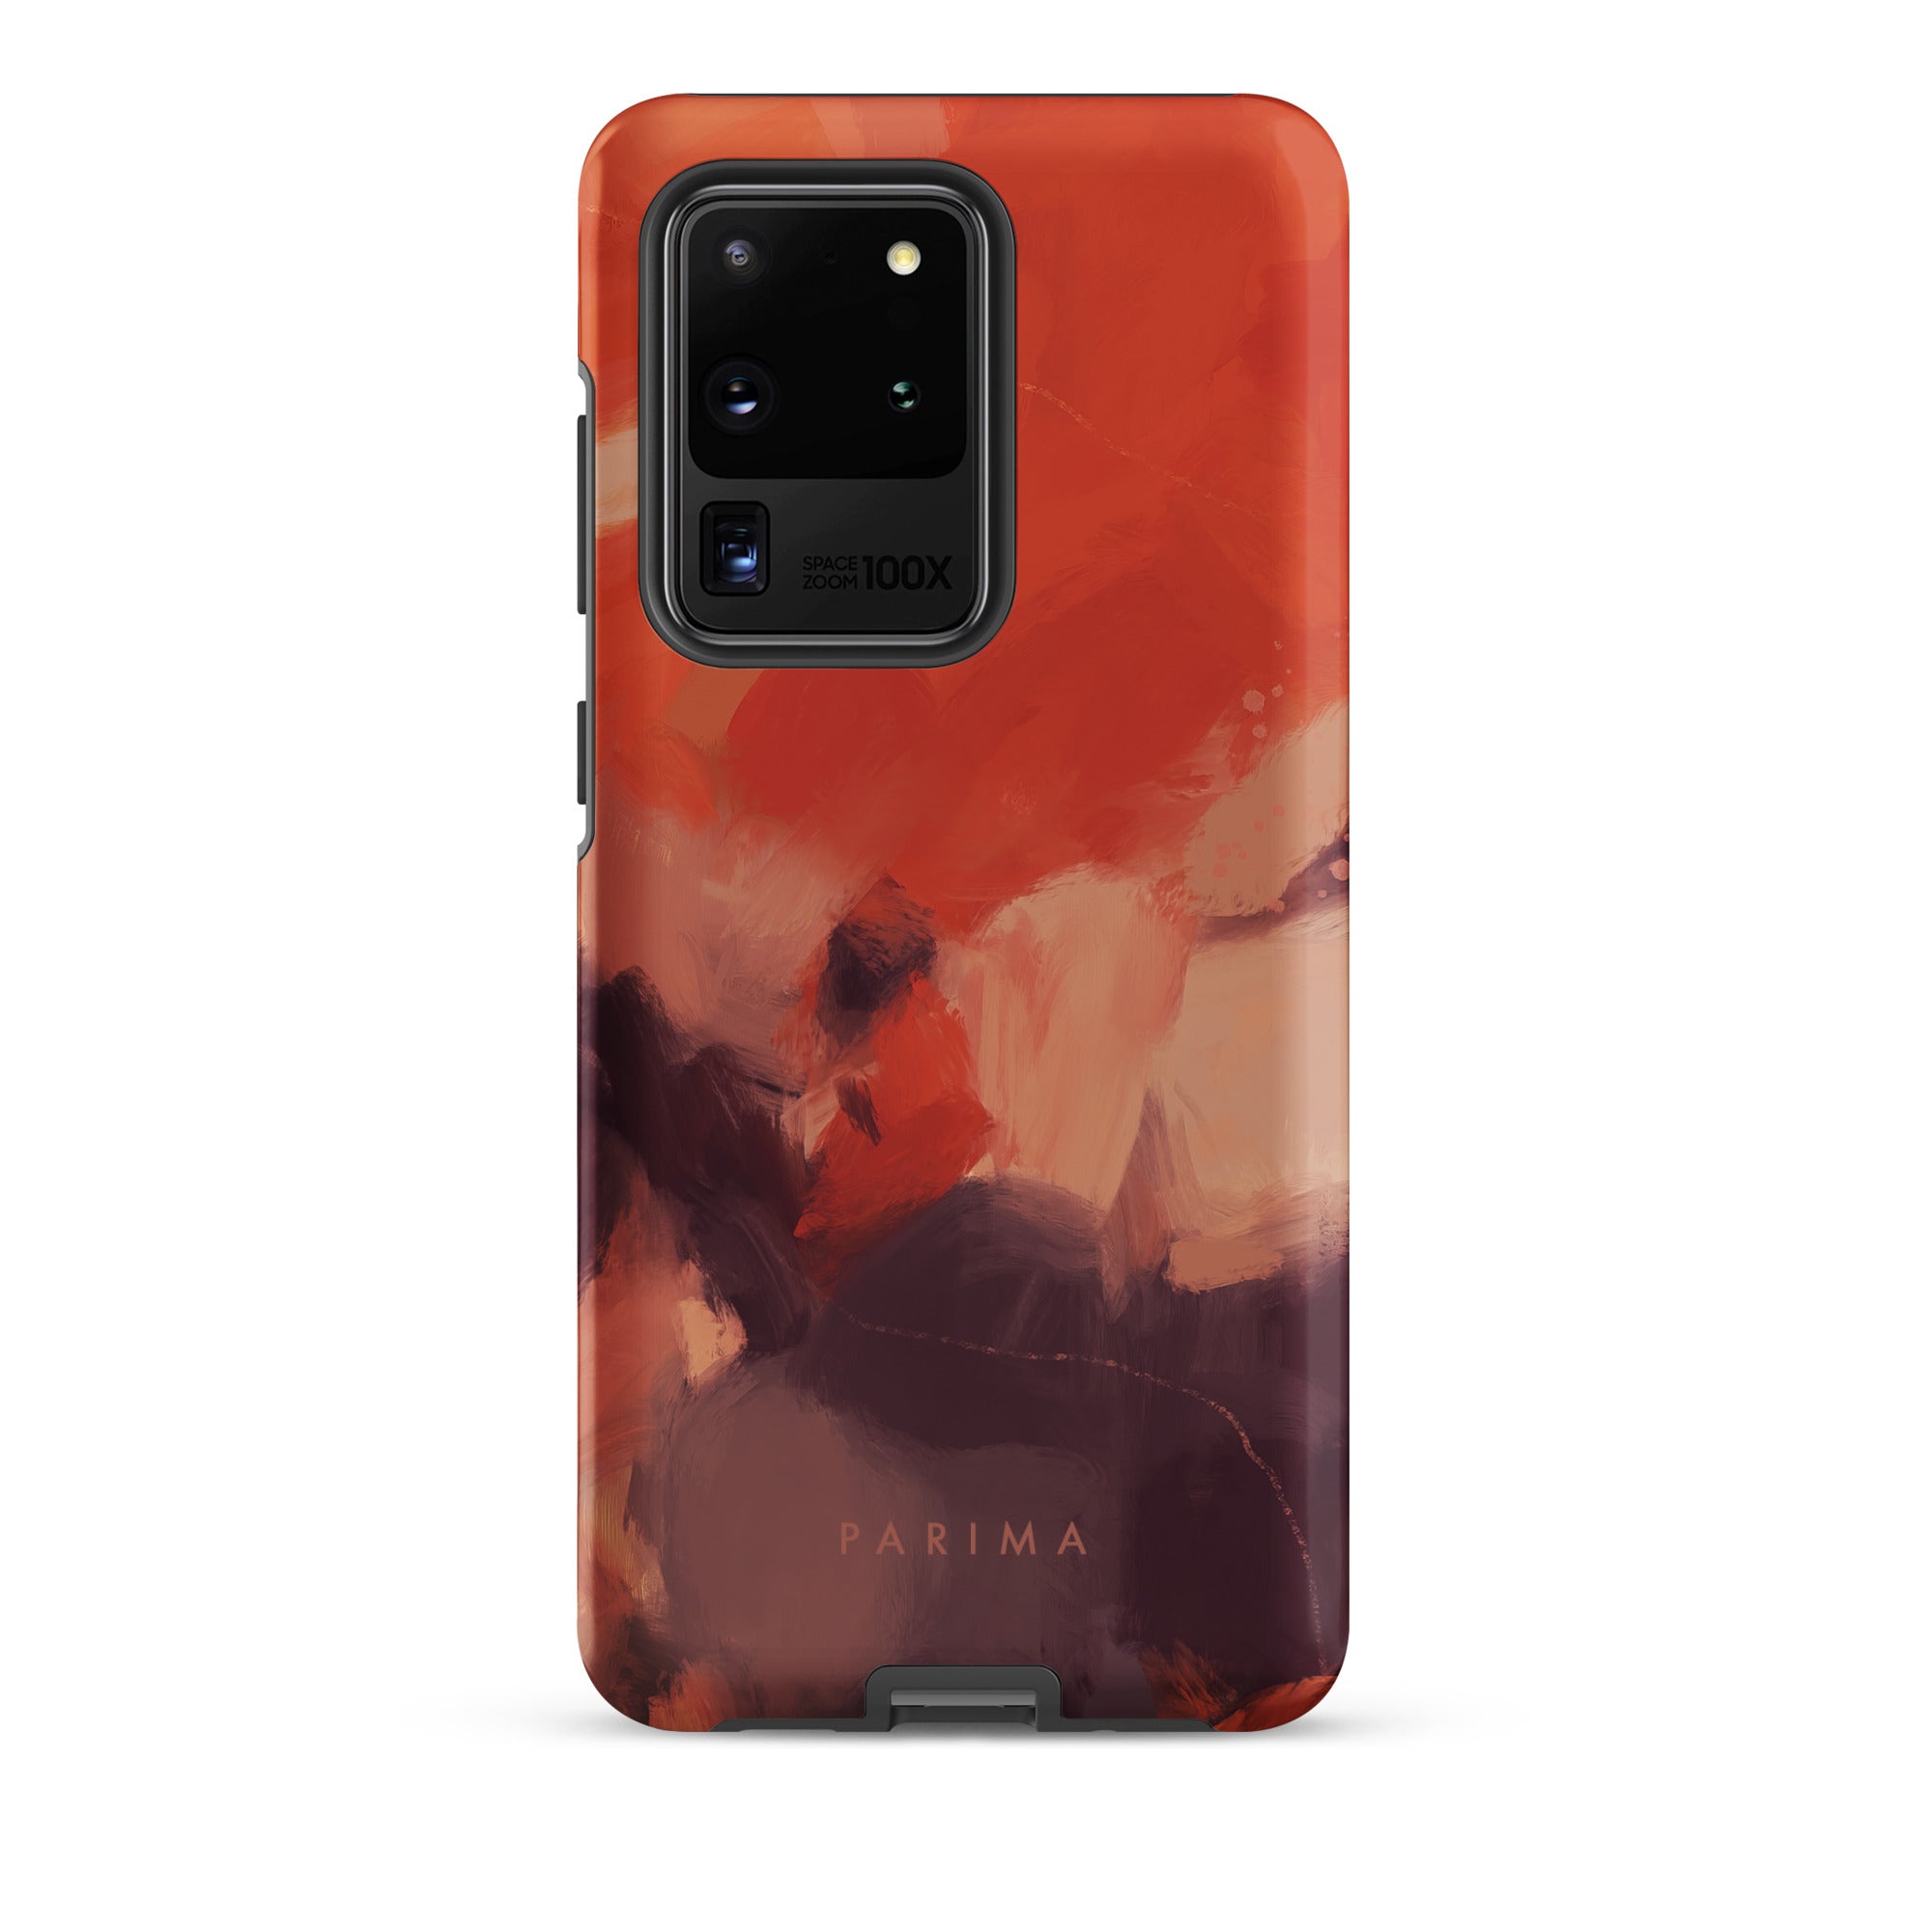 Autumn, orange and purple abstract art on Samsung Galaxy S20 Ultra tough case by Parima Studio